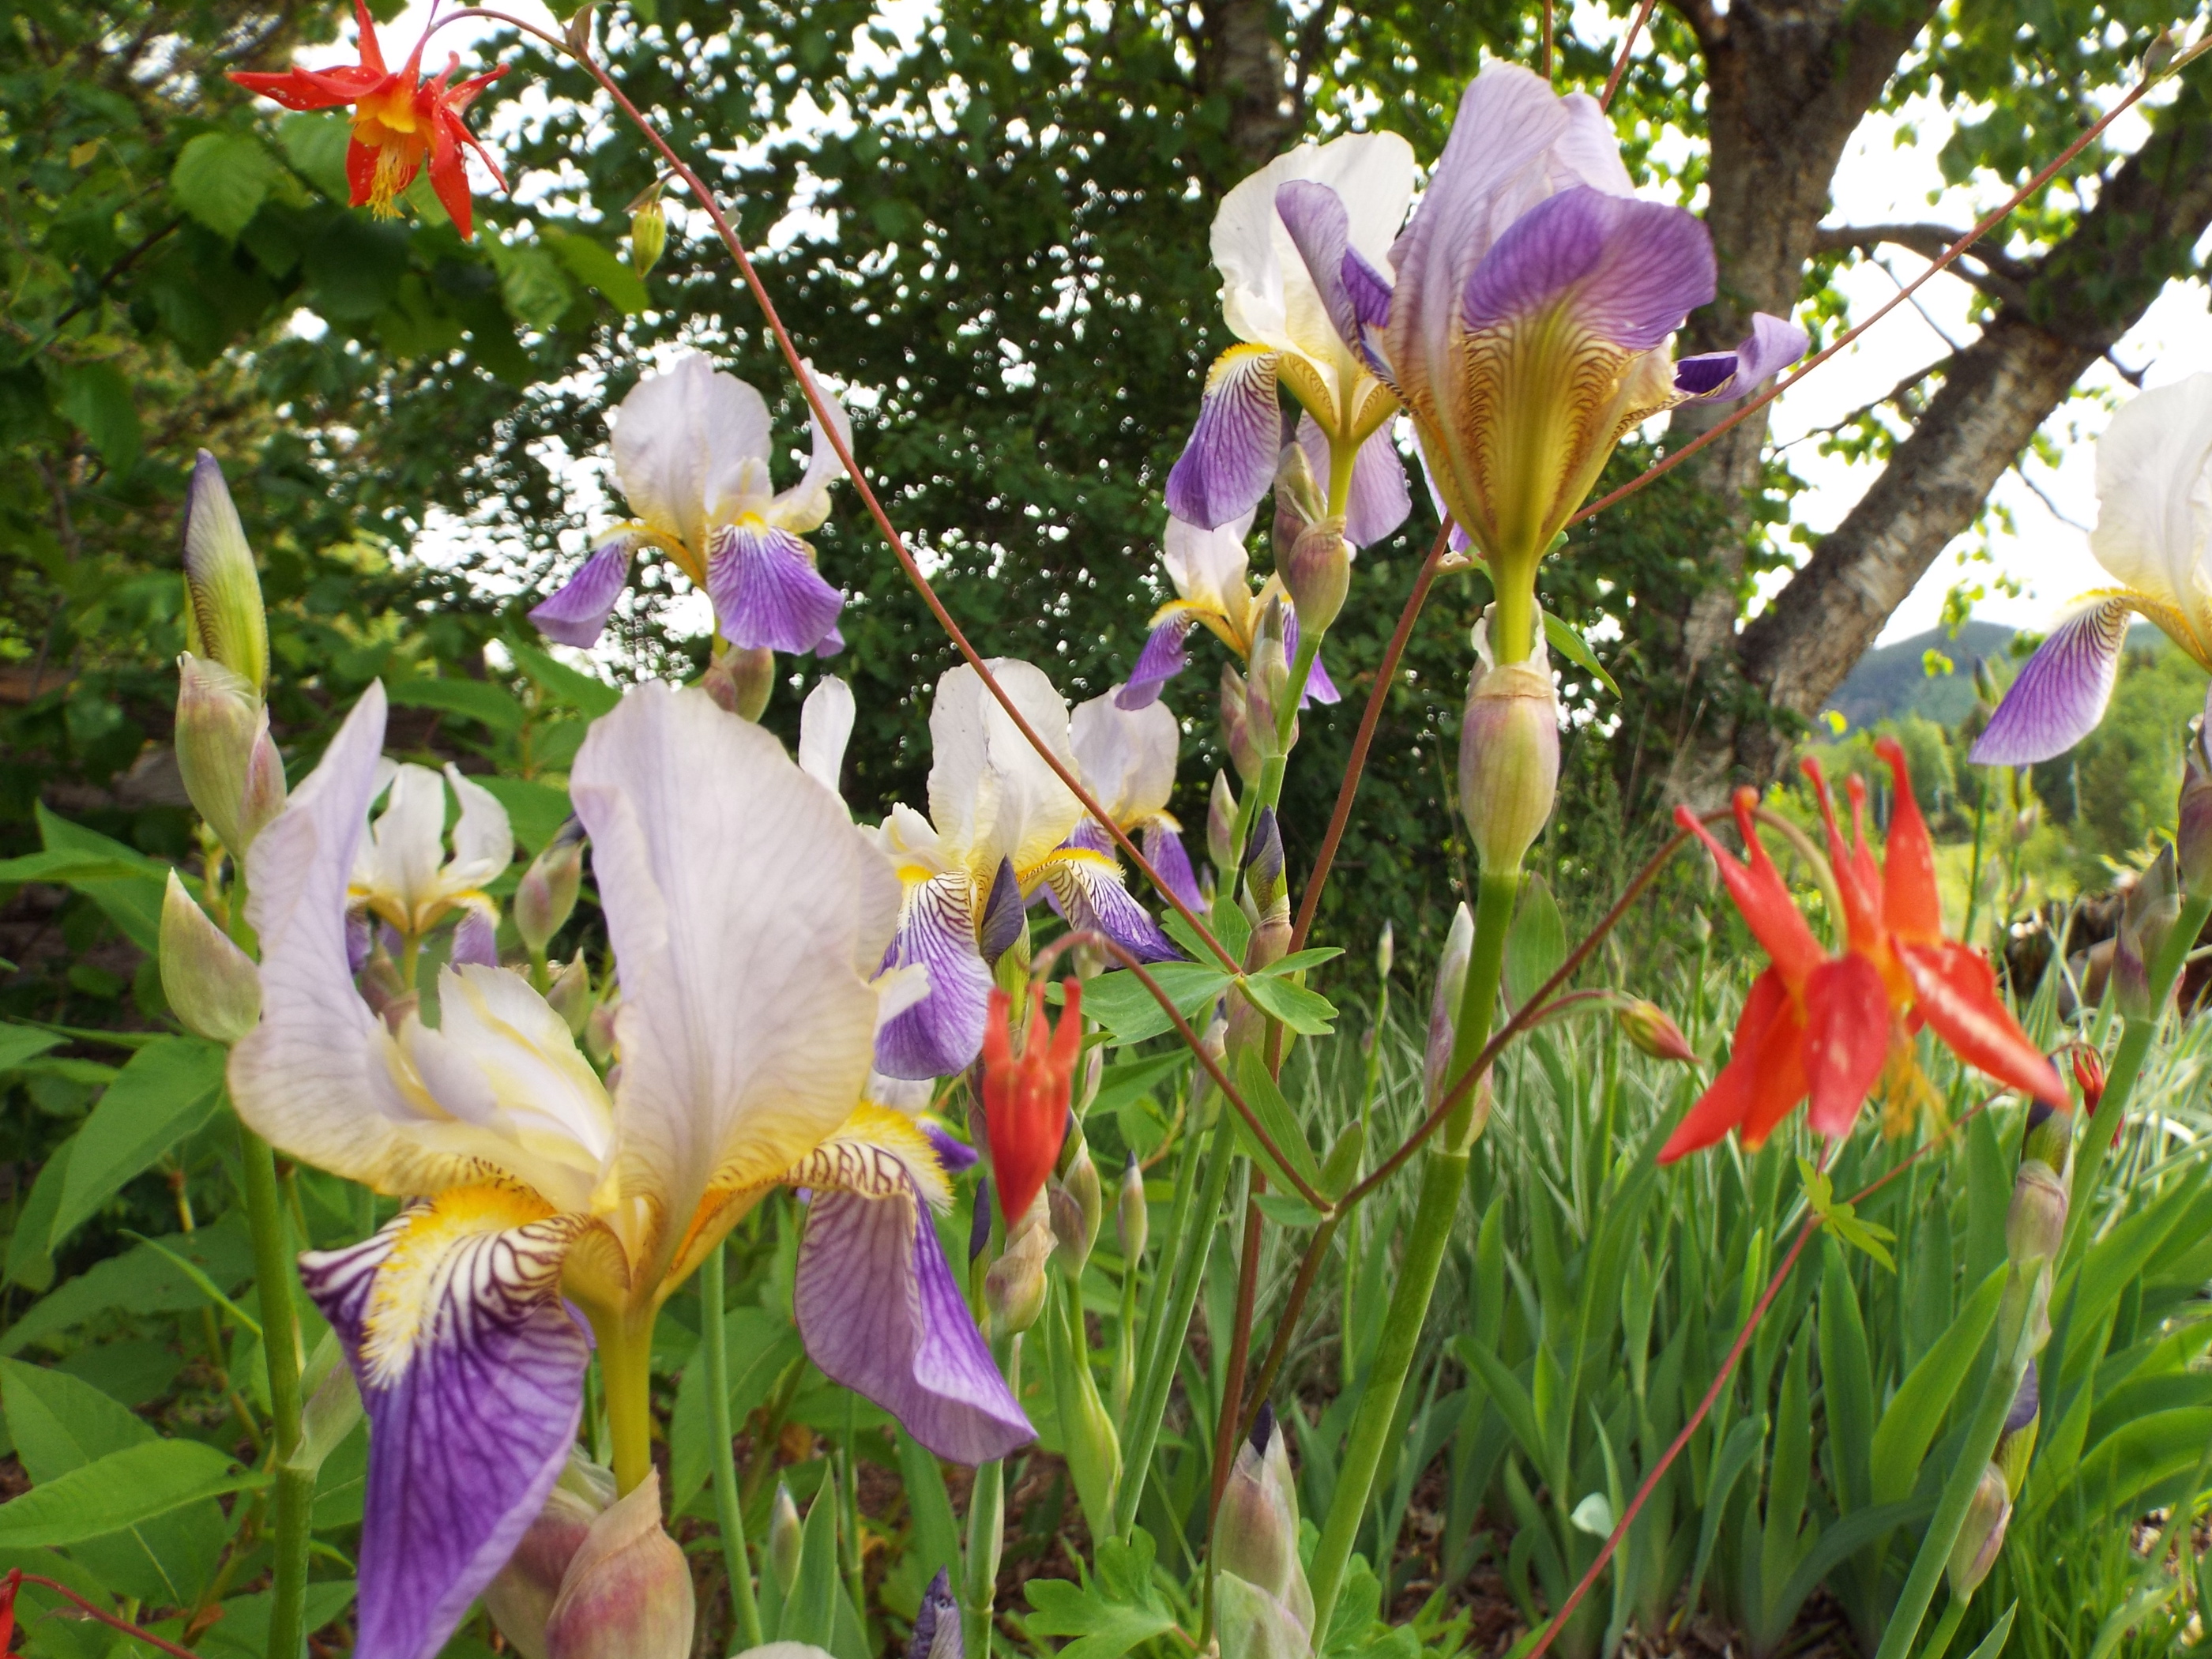 Native columbine volunteering to bloom with planted iris.